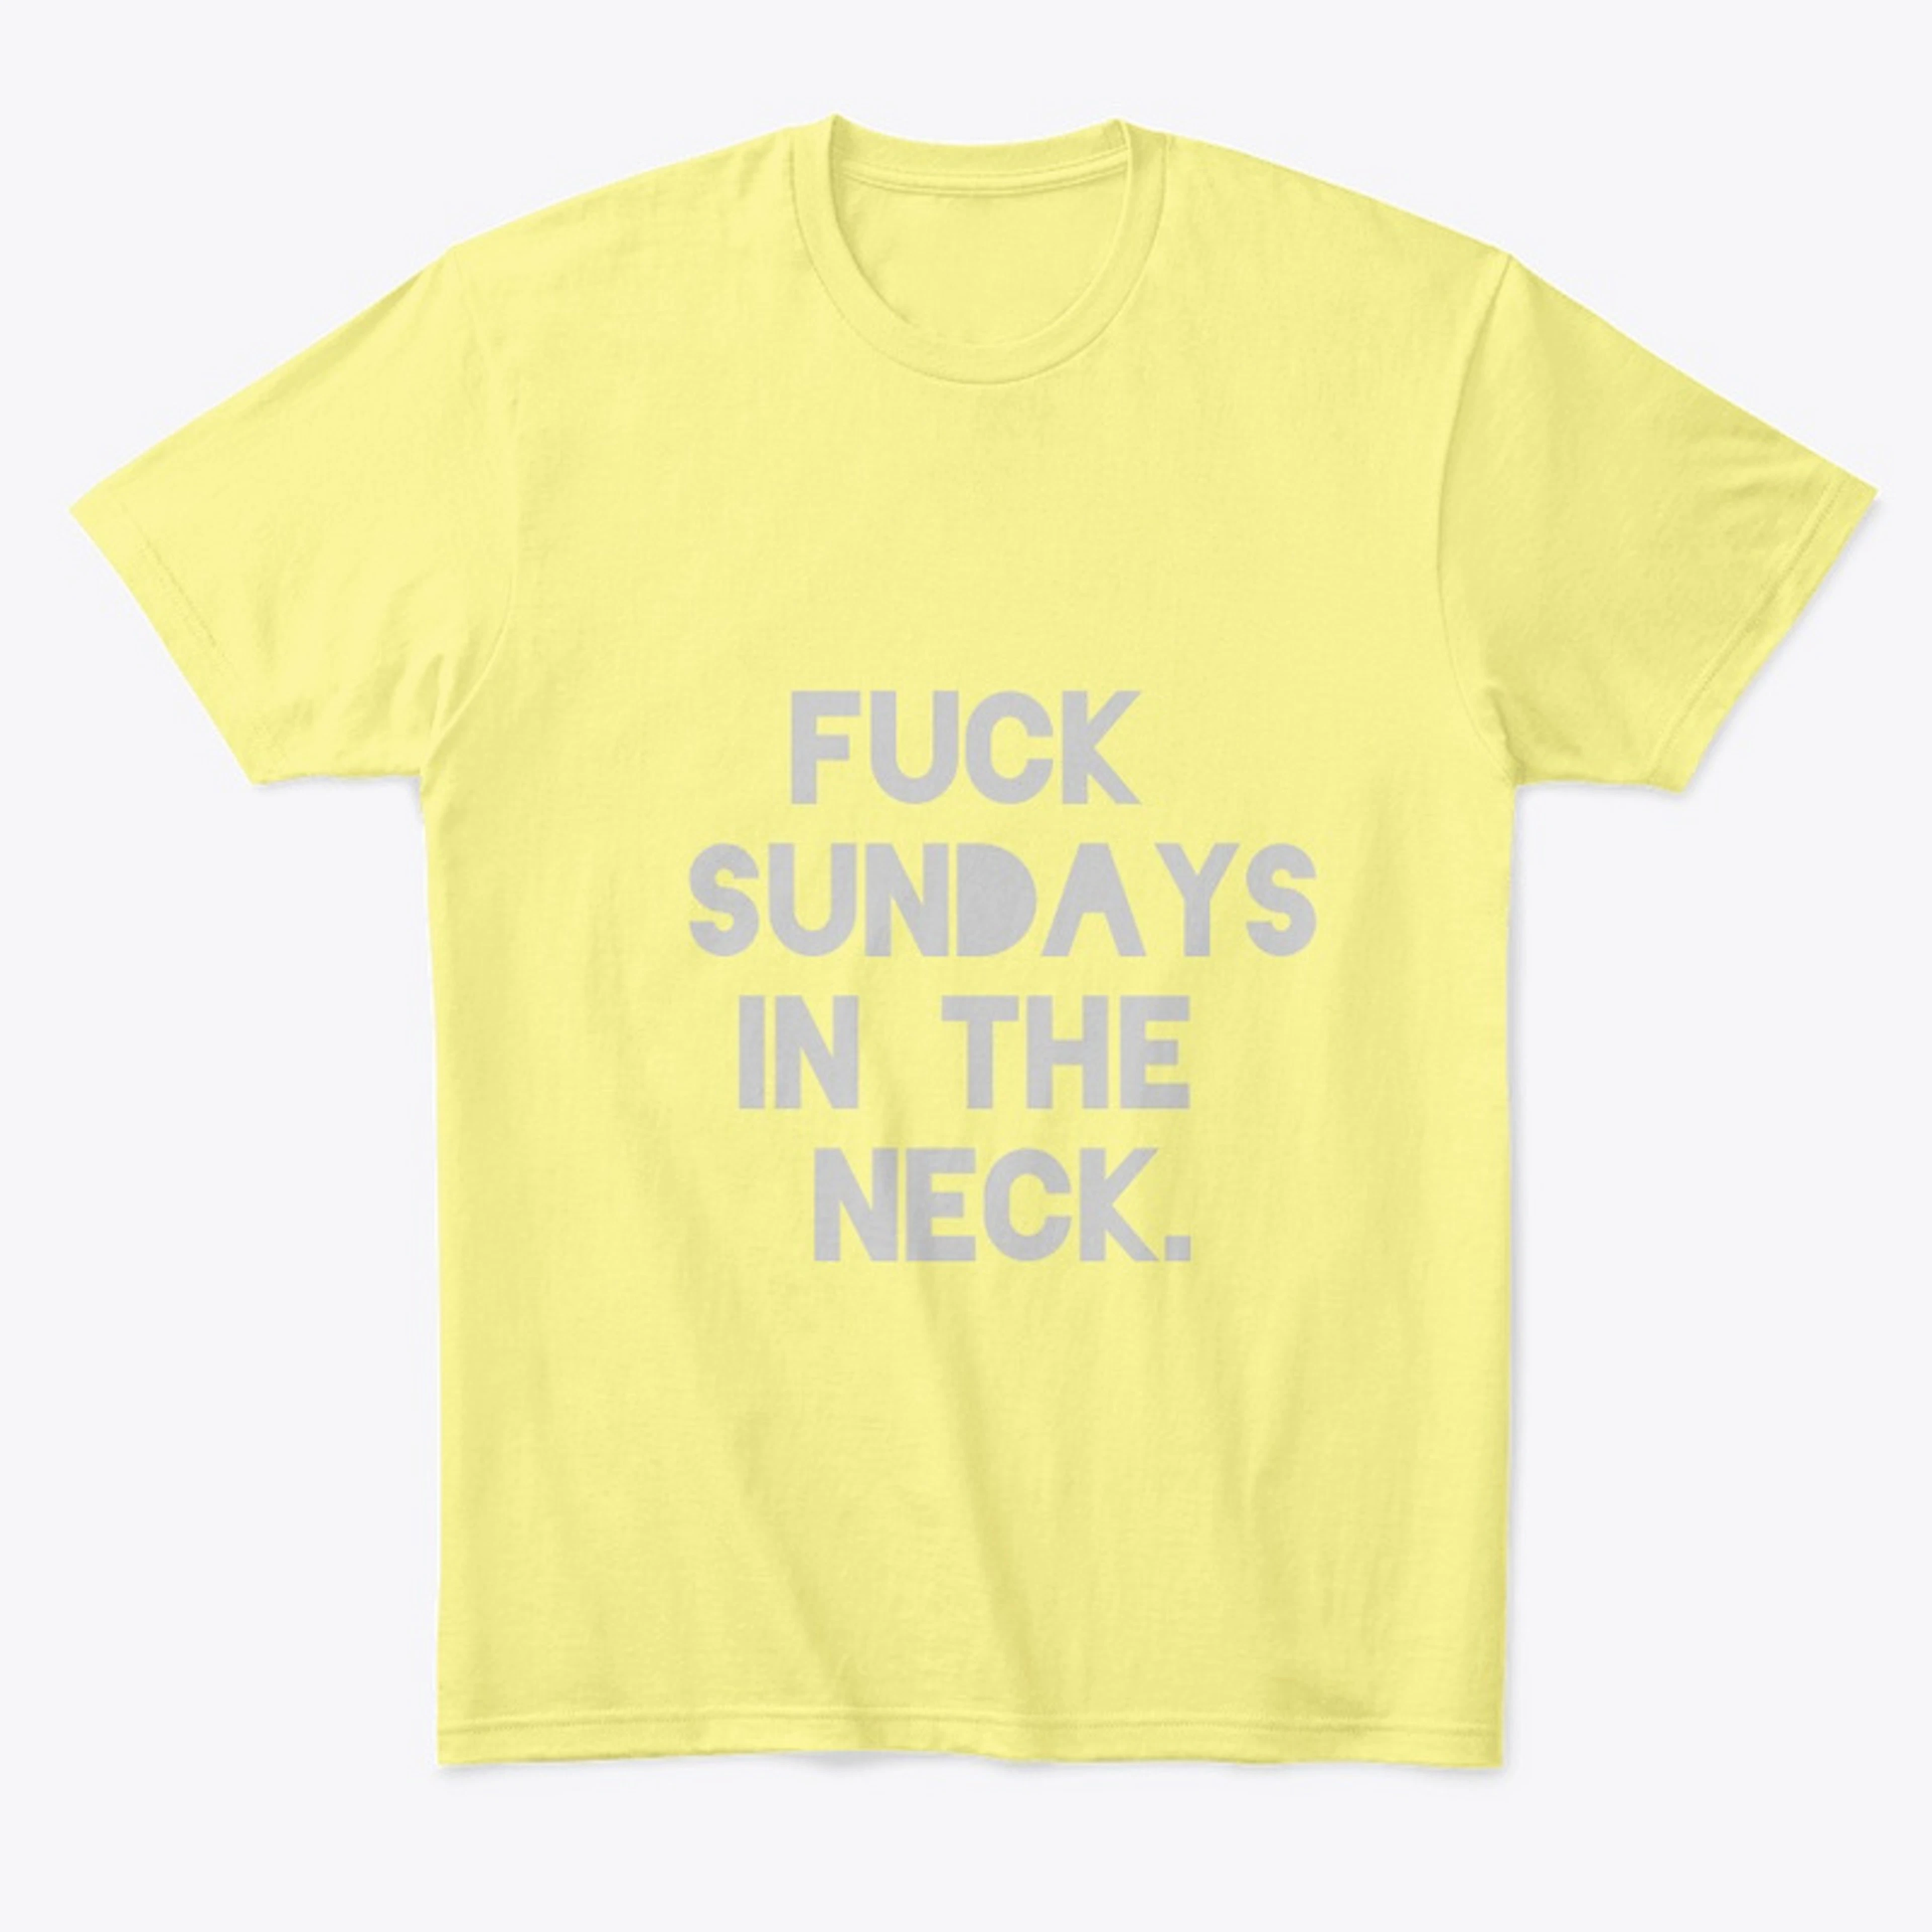 Fuck Sundays in the Neck